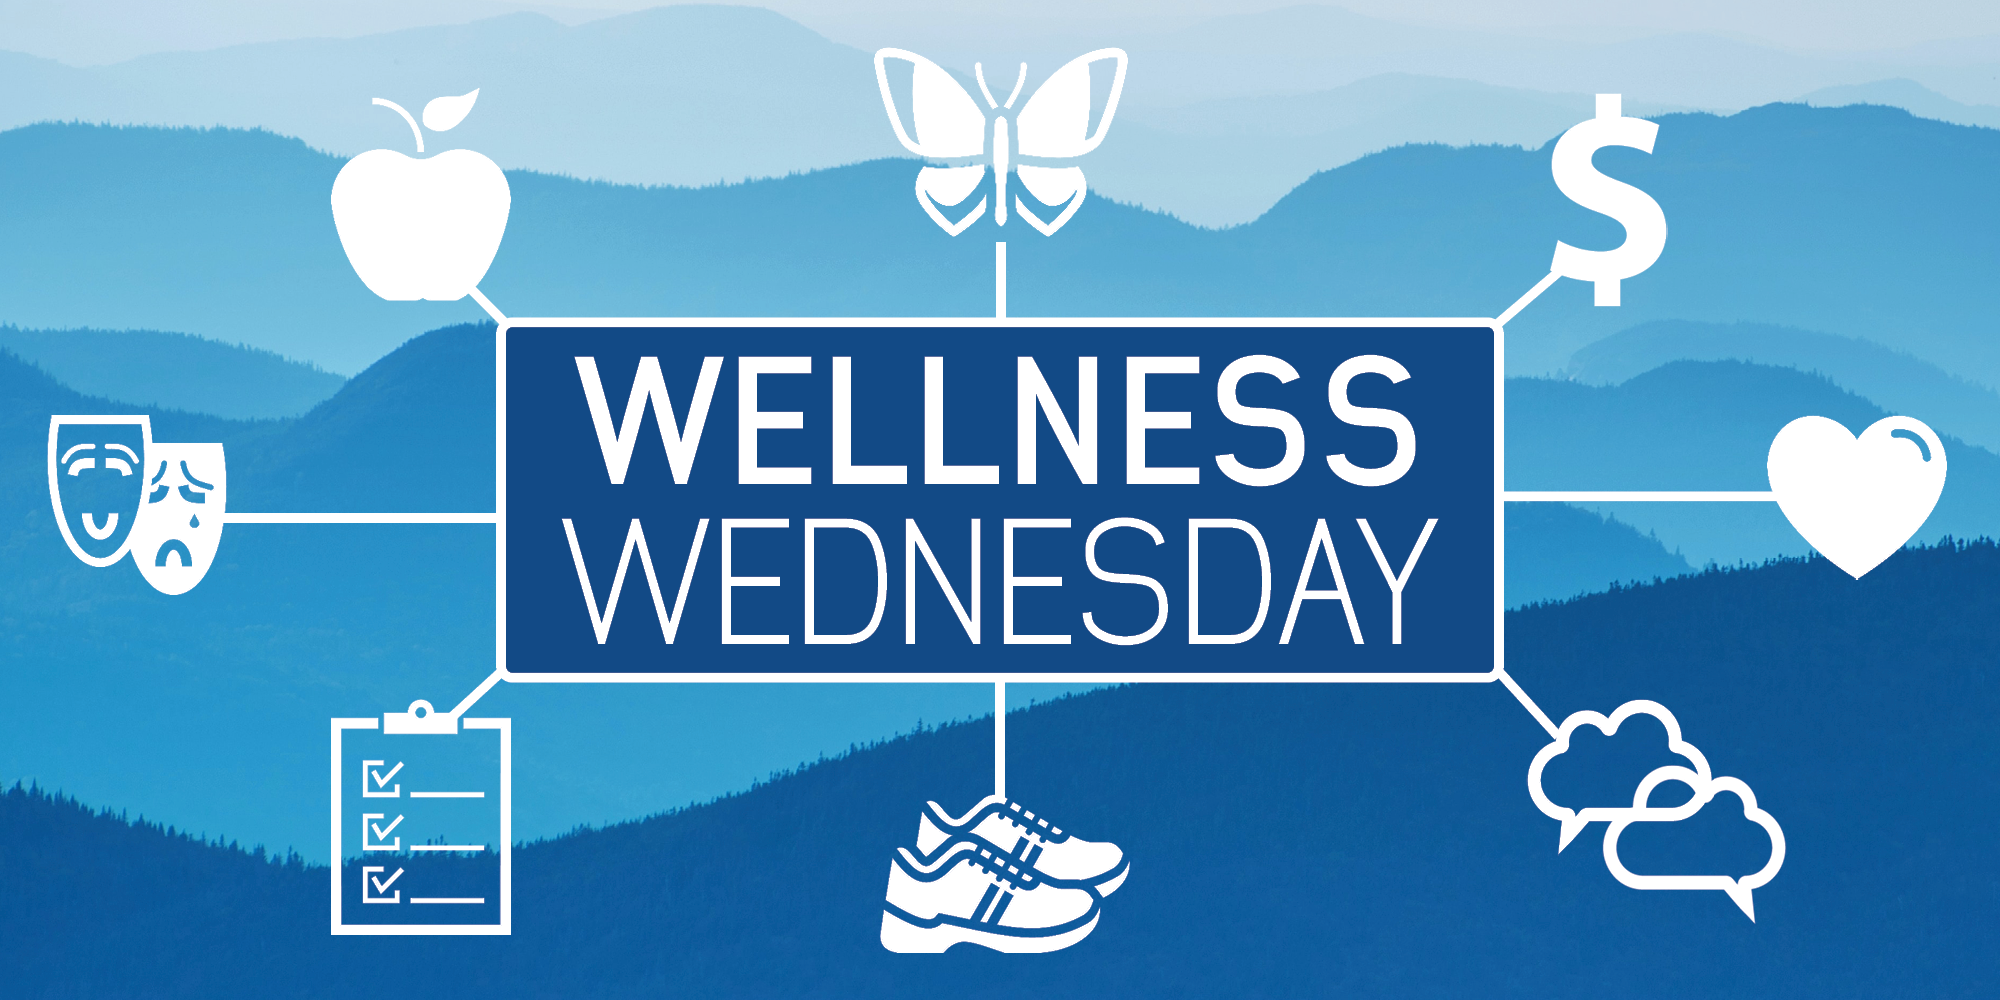 Wellness Wednesday: Develop an attitude of gratitude - The City of Asheville